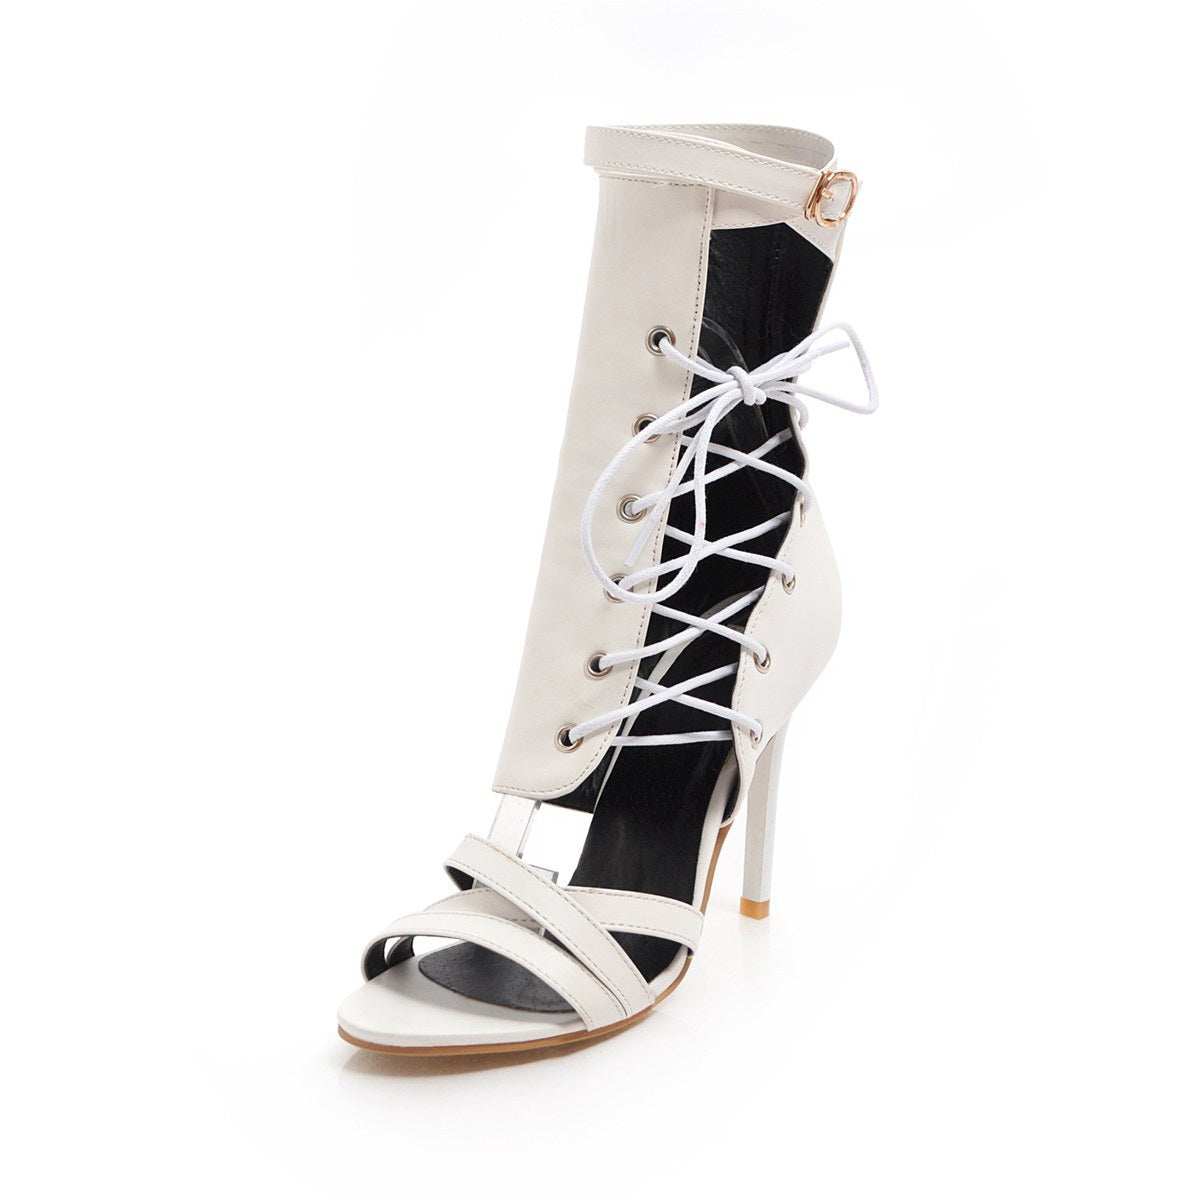 "Shredded" Style High Heel Boot